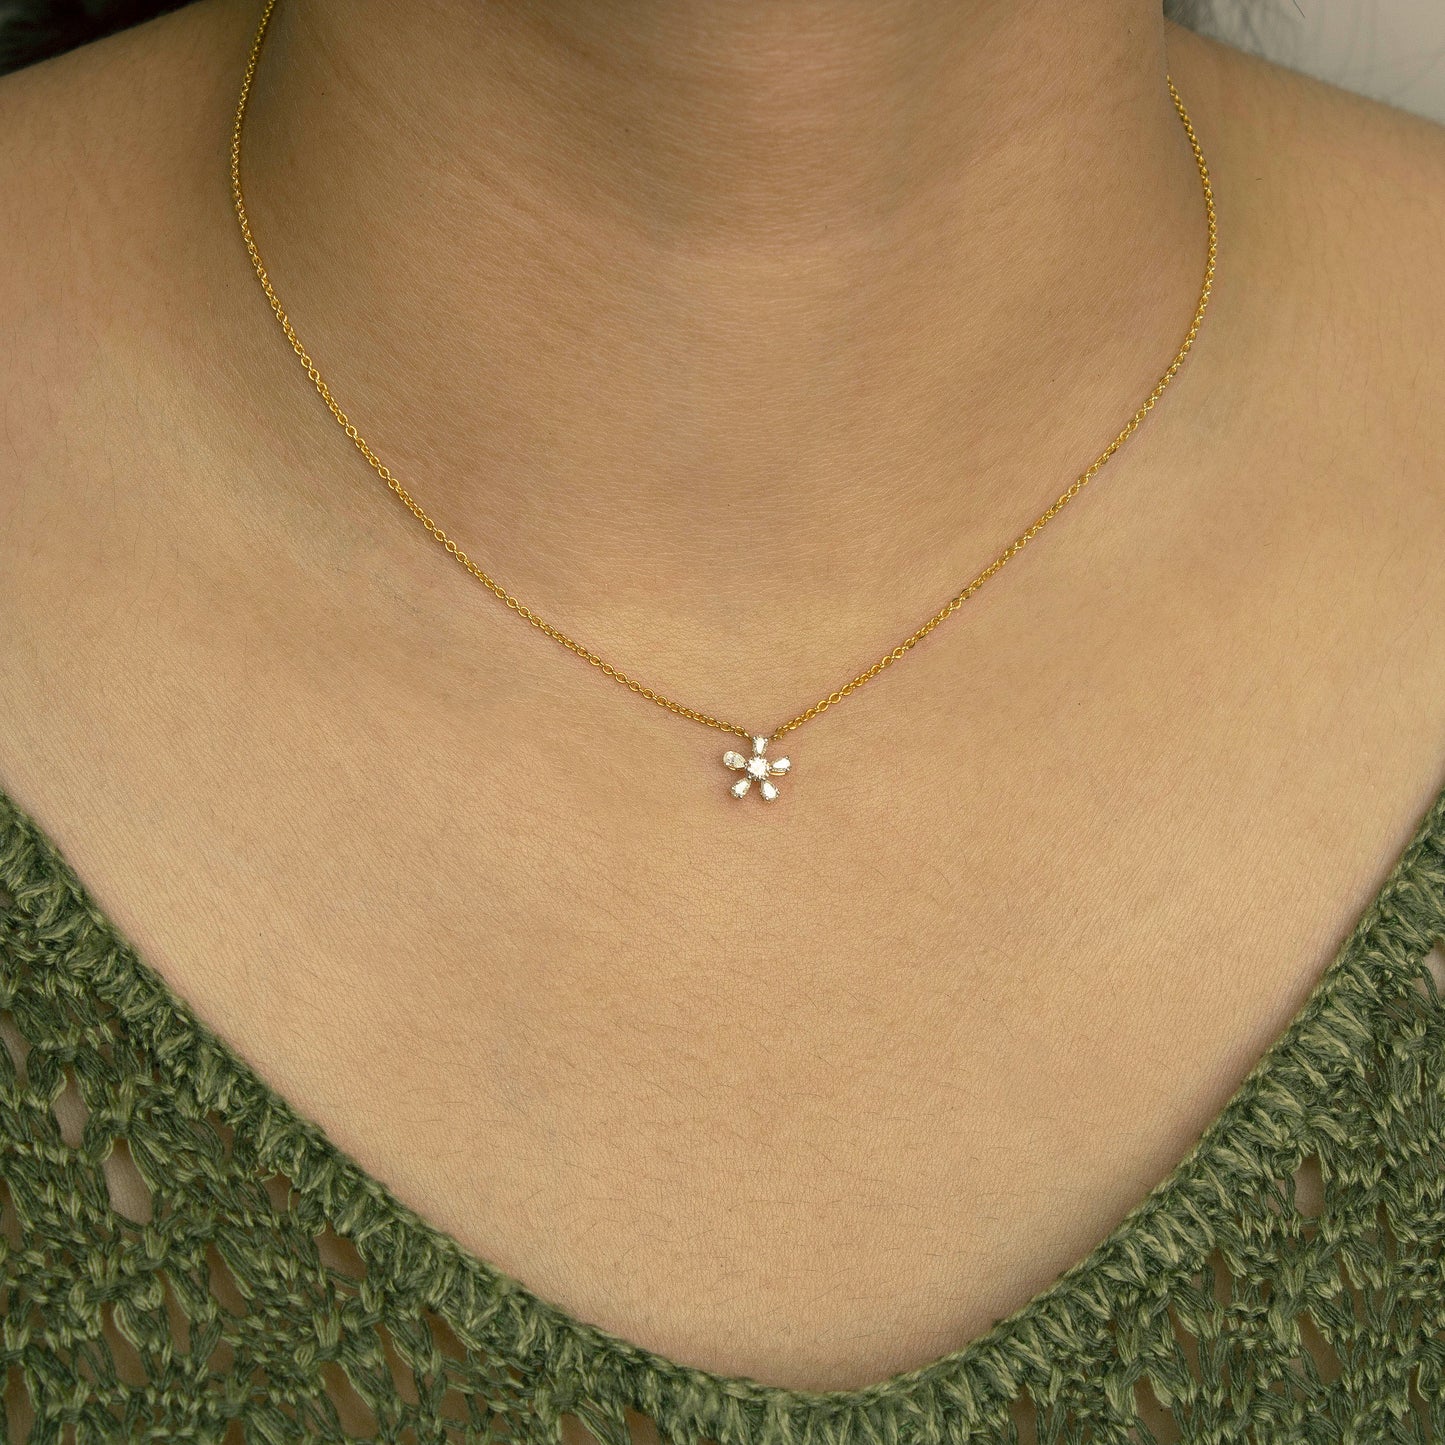 Daisy Diamond Necklace